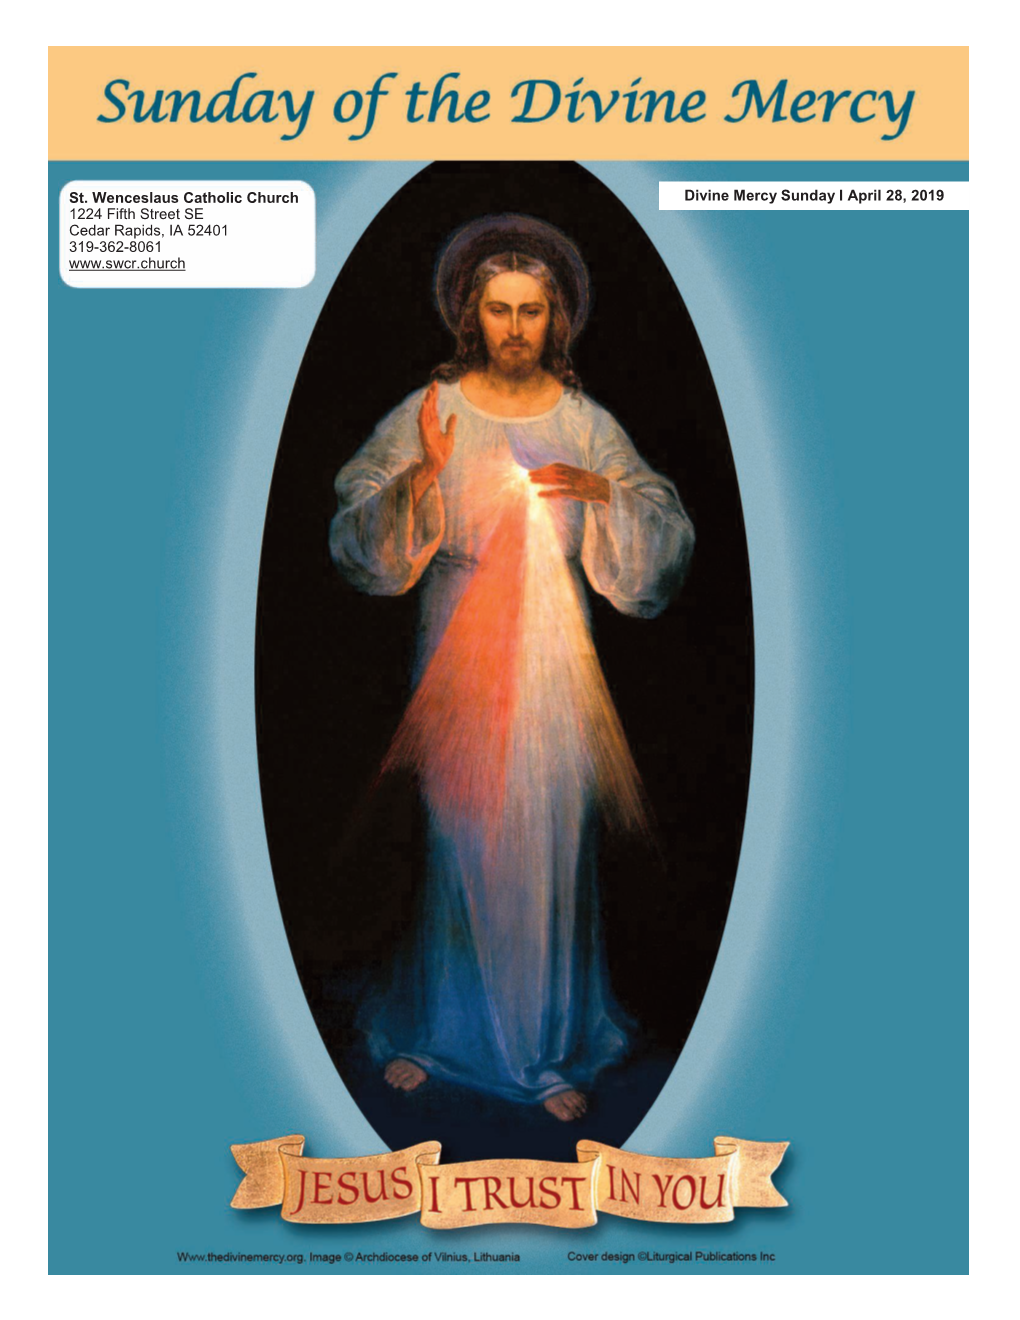 Divine Mercy Sunday L April 28, 2019 St. Wenceslaus